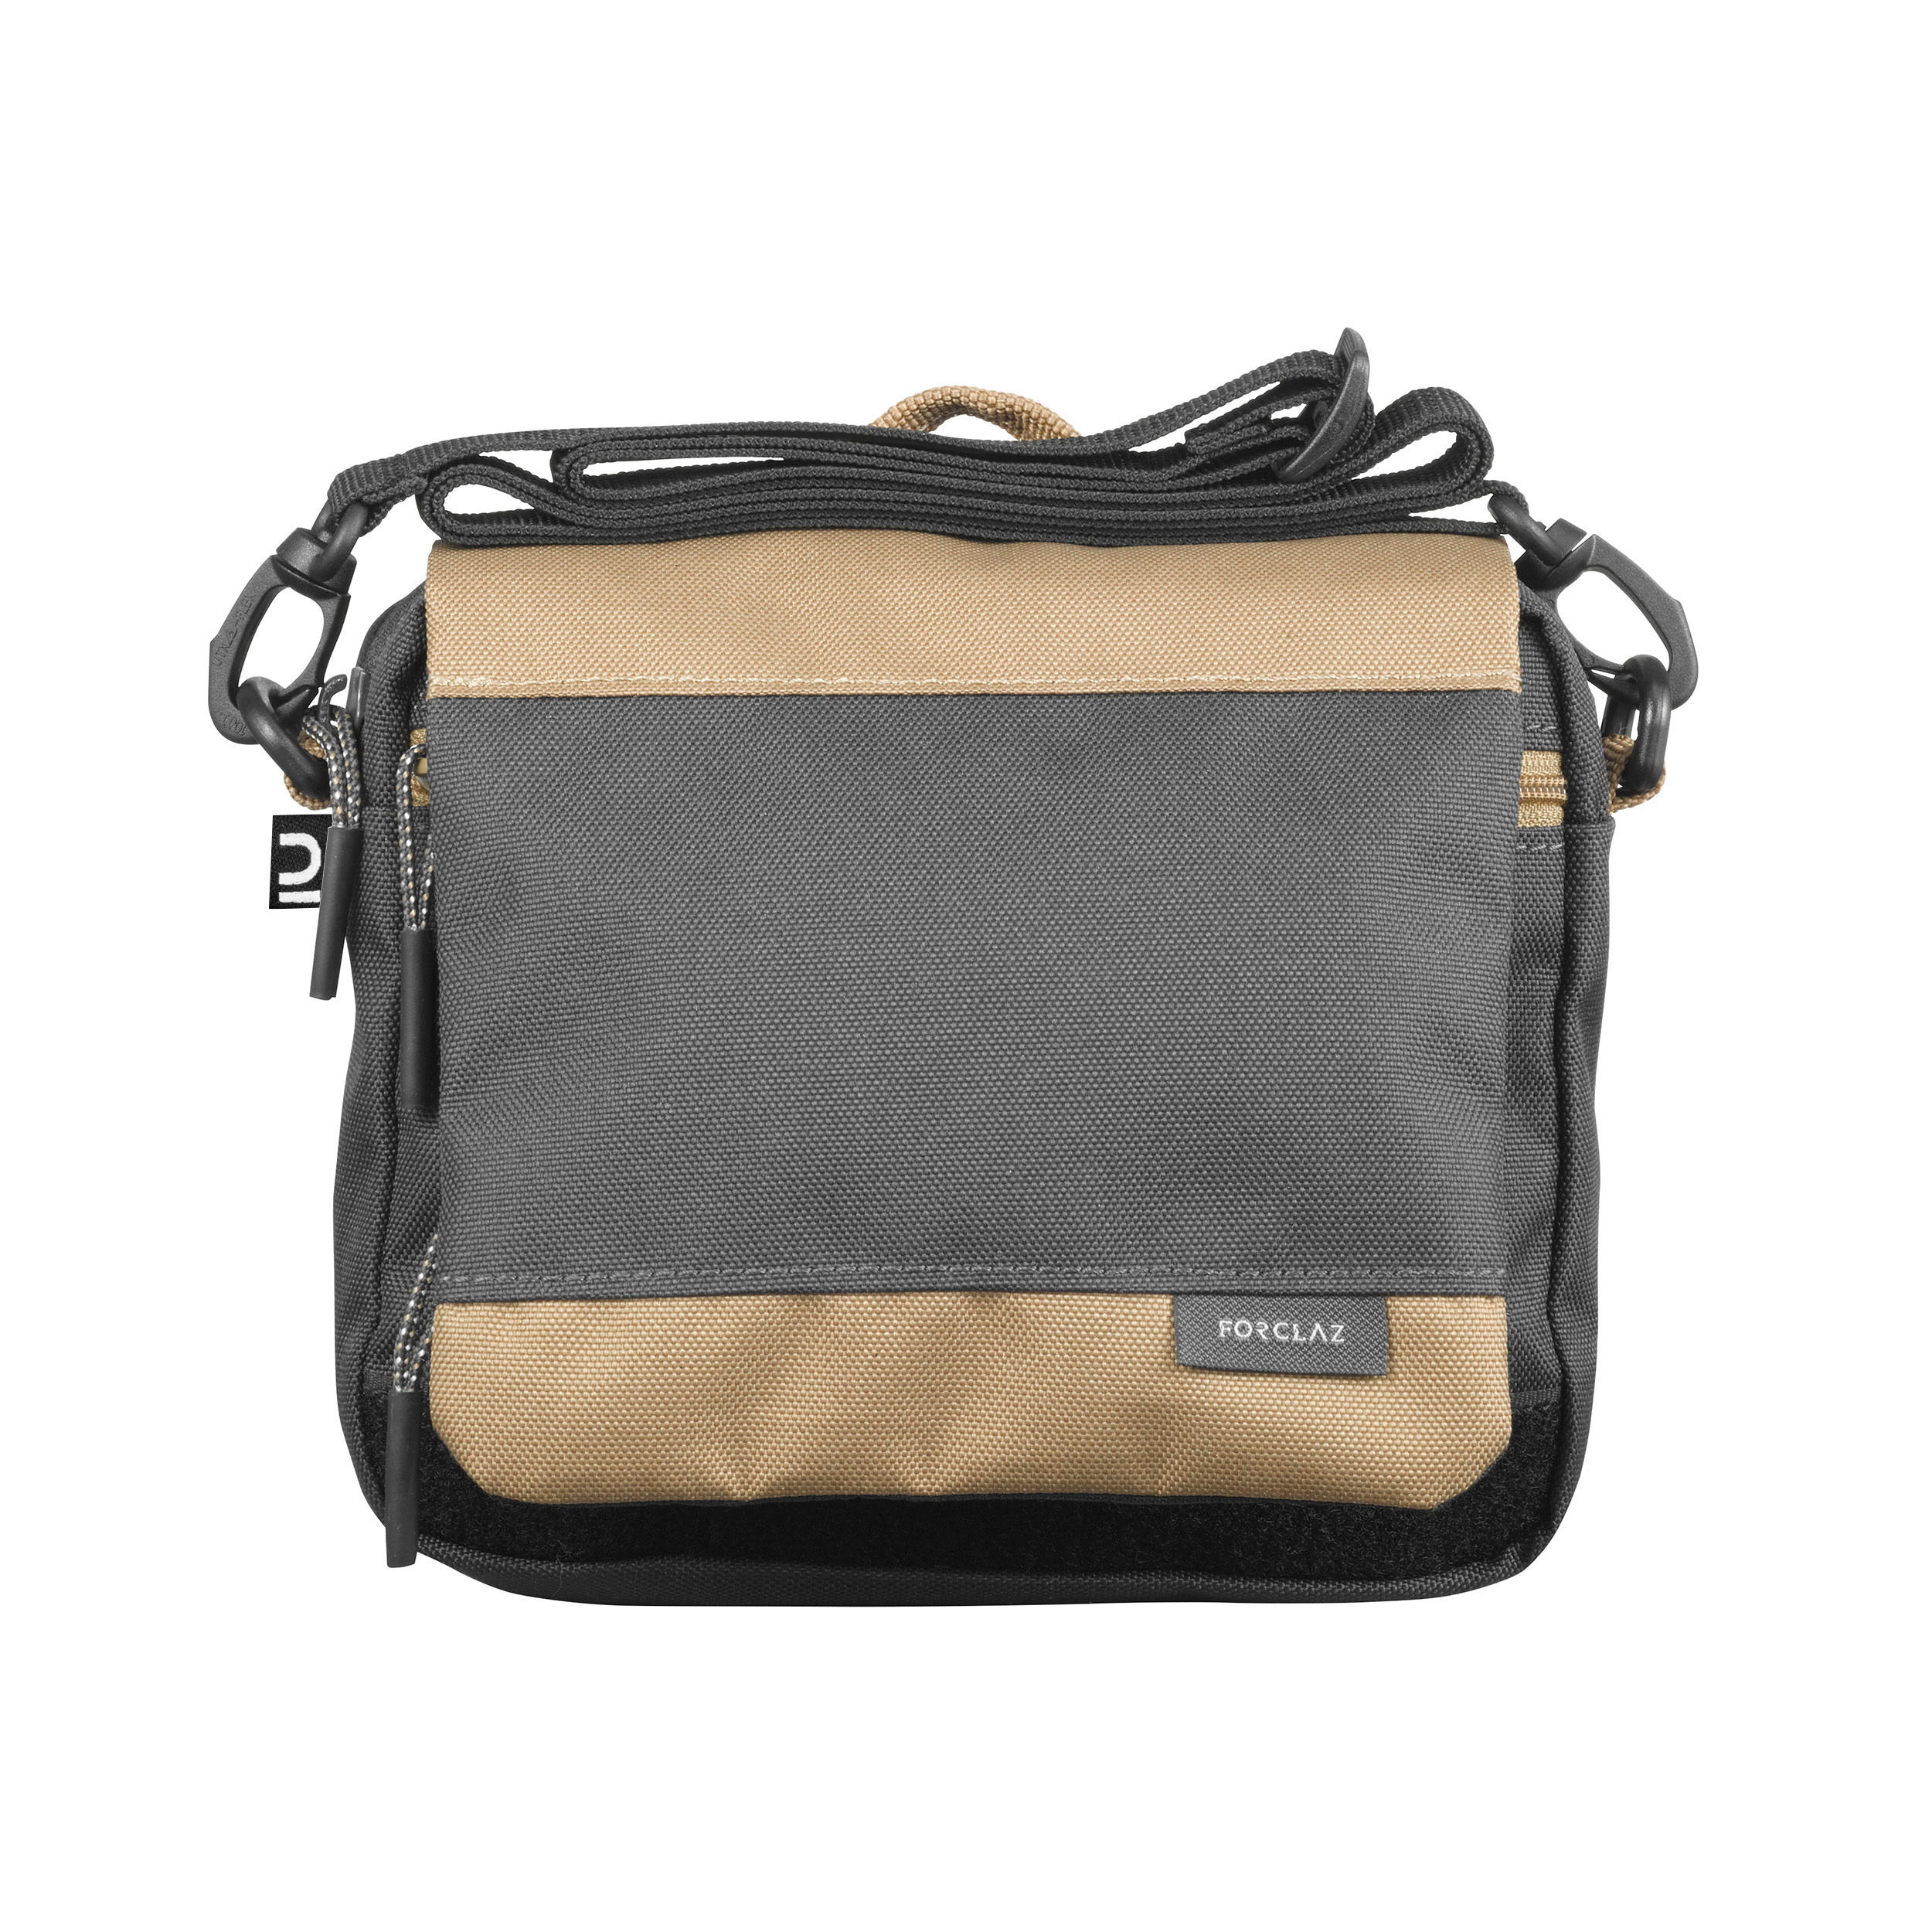 Trek Travel Waist Bag 5 L - brown : Amazon.in: Sports, Fitness & Outdoors